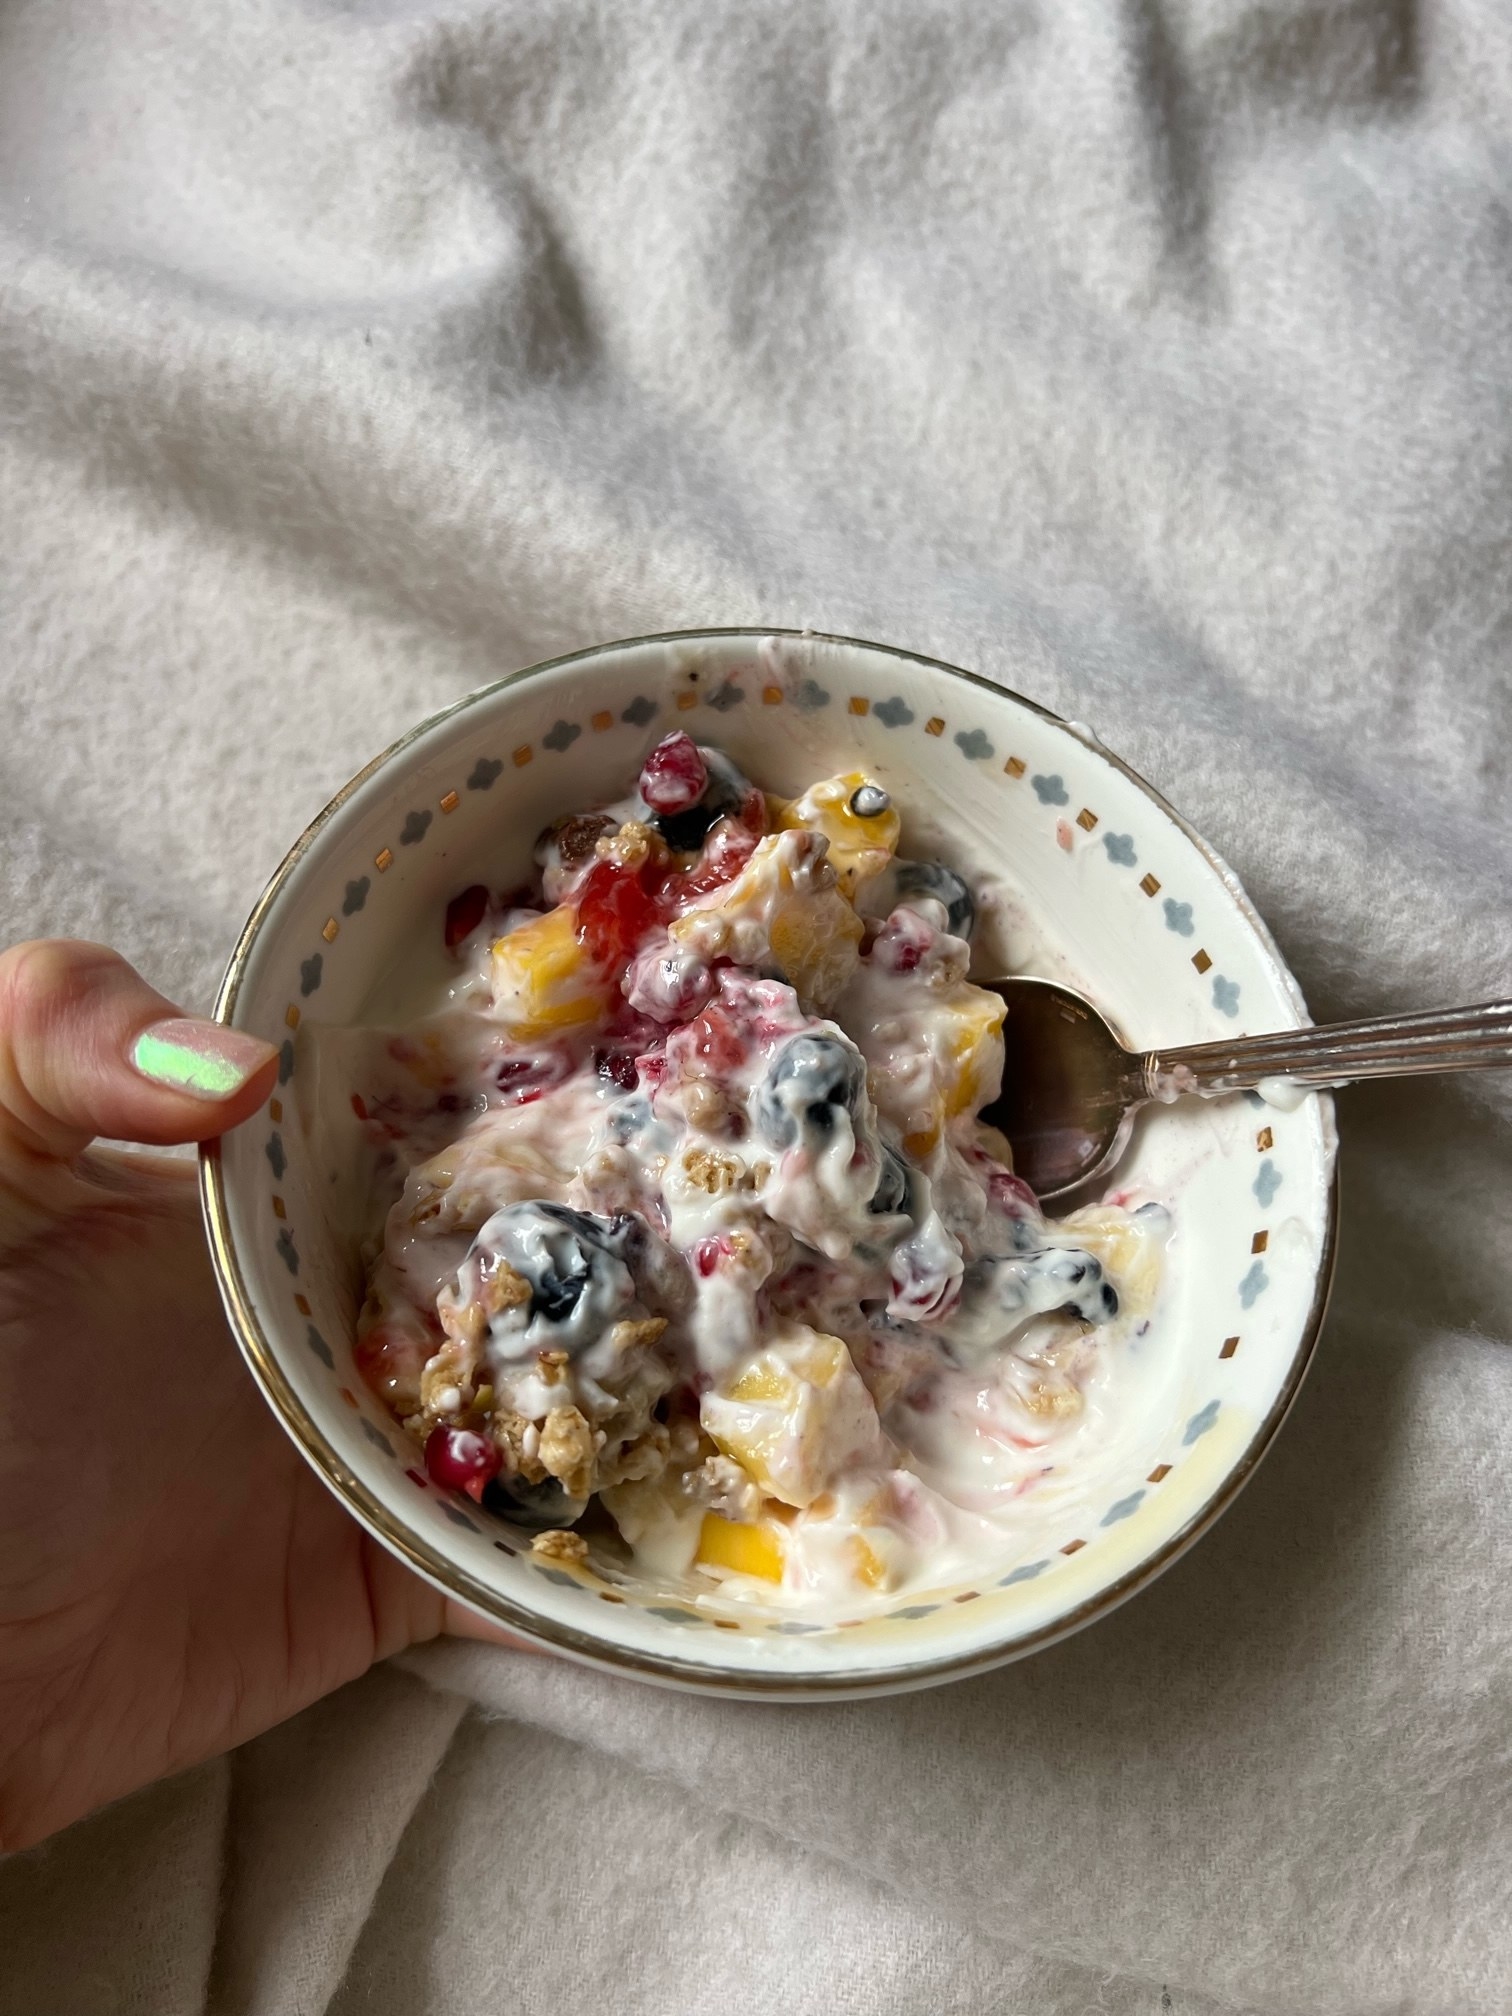 A bowl of fruit and yogurt and granola.